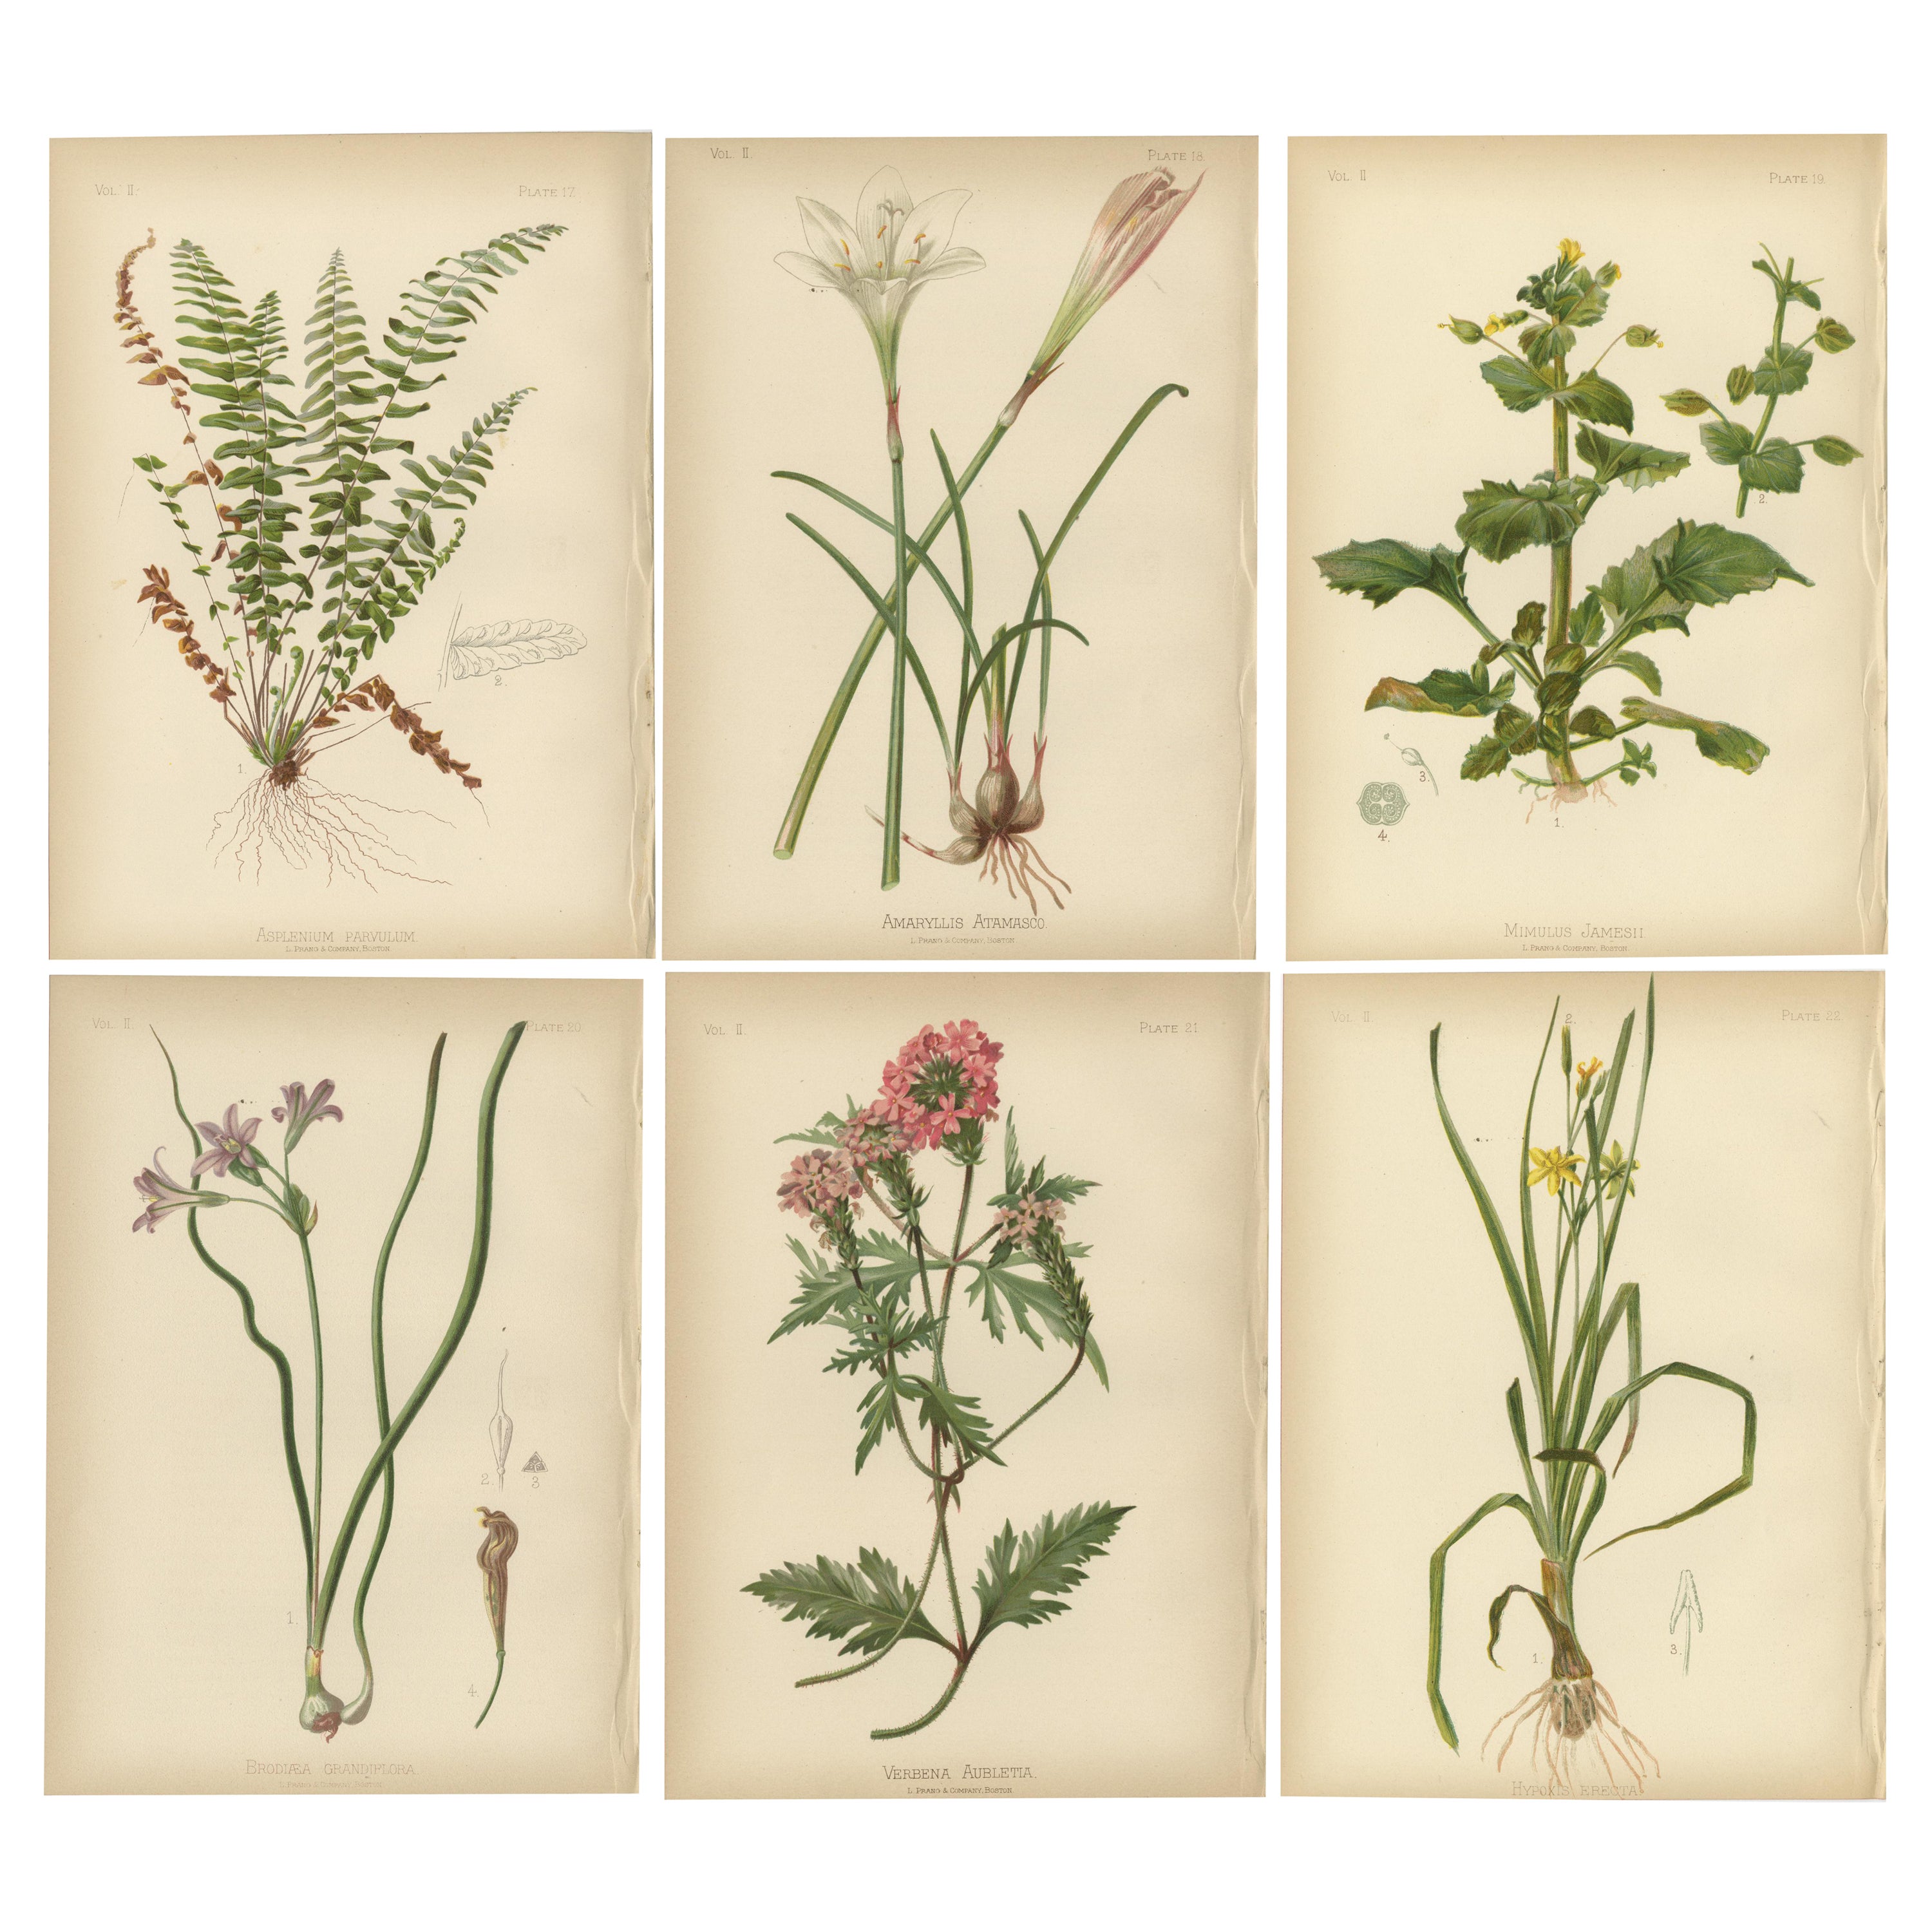 Verdant Vintage: A Collection of 1879 Botanical Illustrations